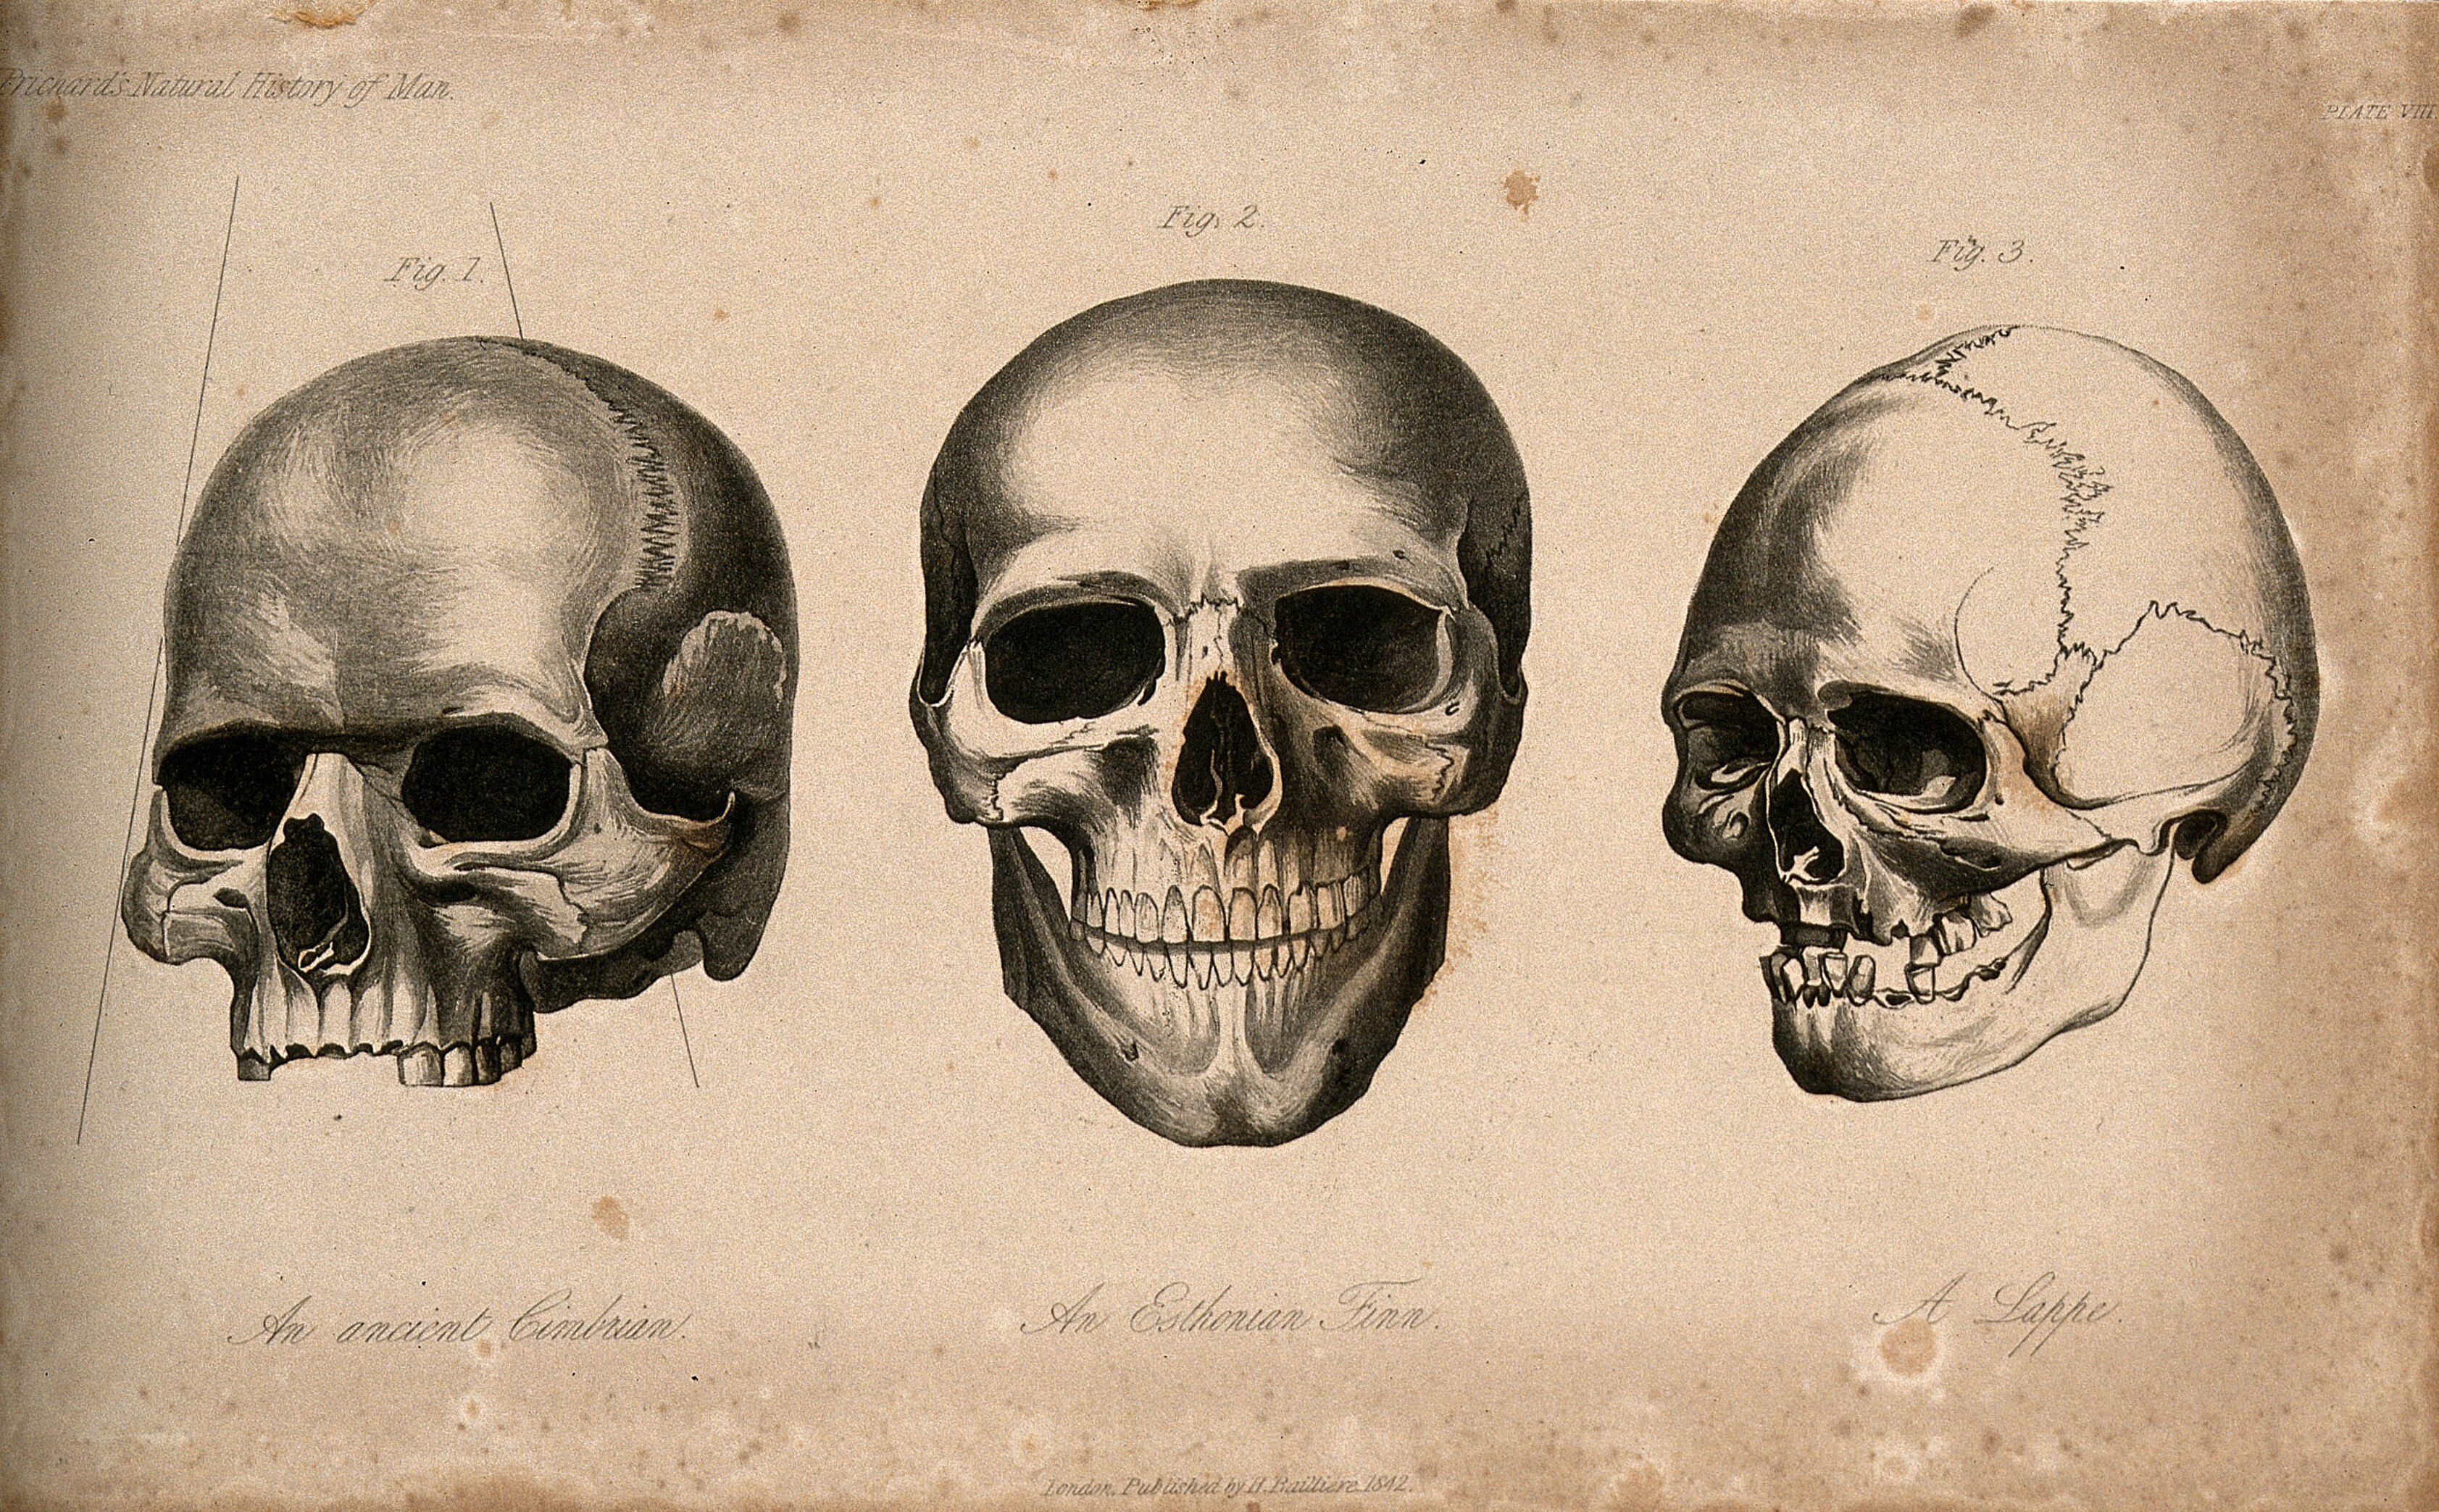 19th century woodcut illustration of three human skulls. Faint scripted labels indicate the skulls presumed origins